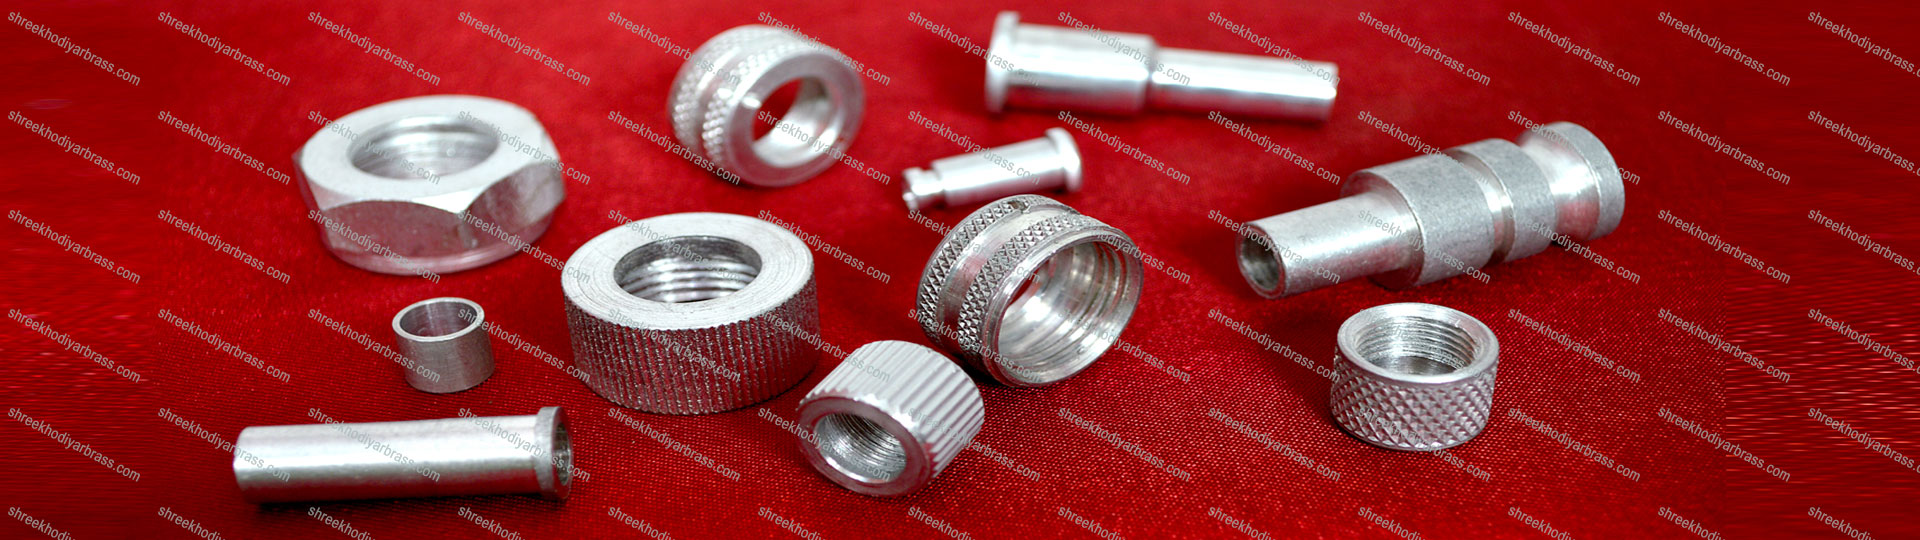 Aluminium auto parts, automotive components